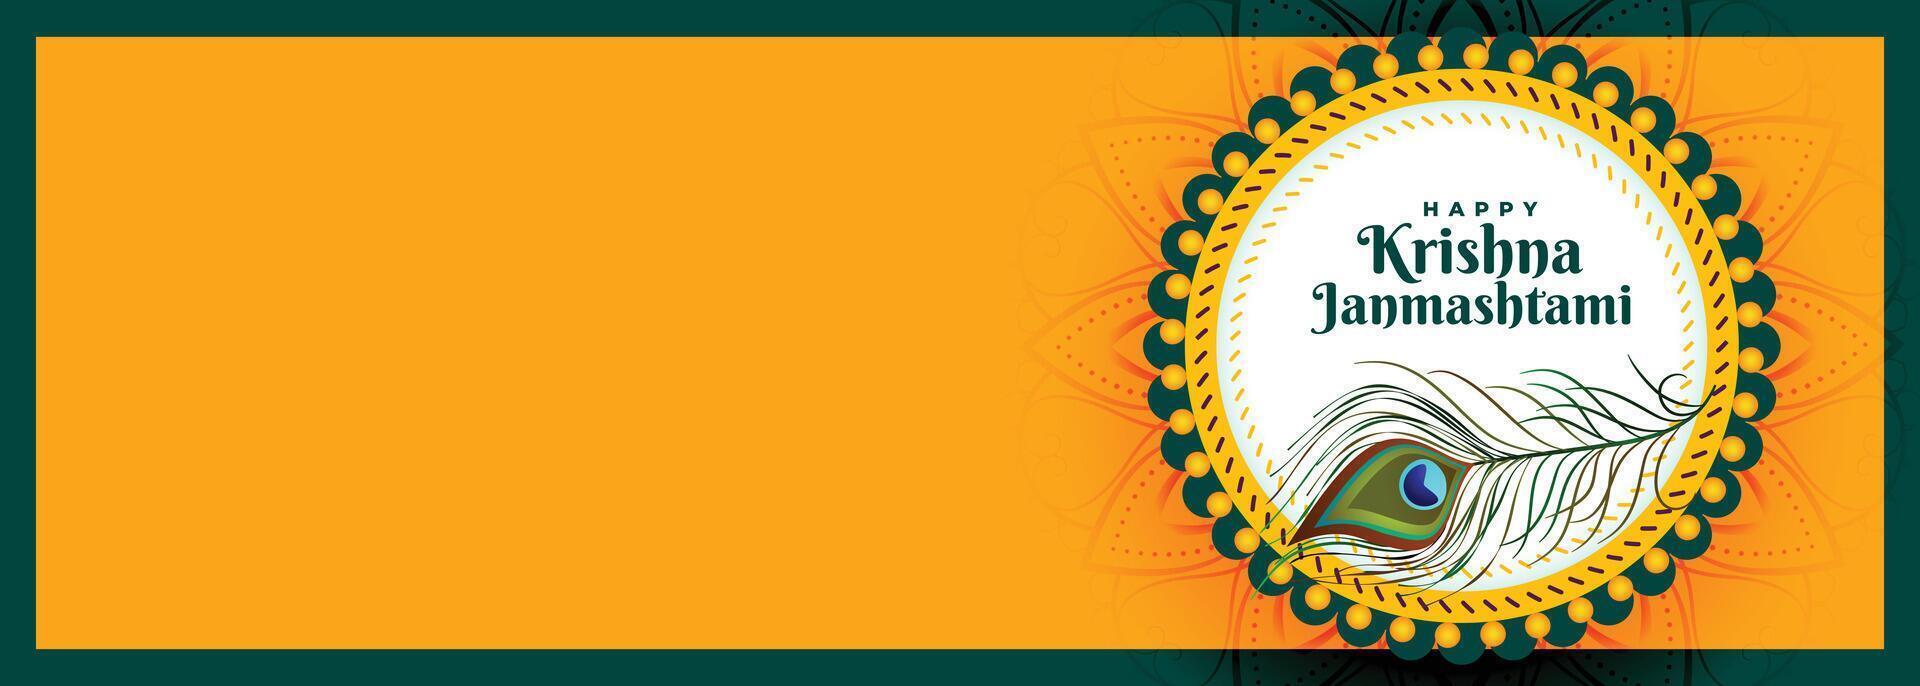 decorative happy krishna janmashtami festival banner design vector